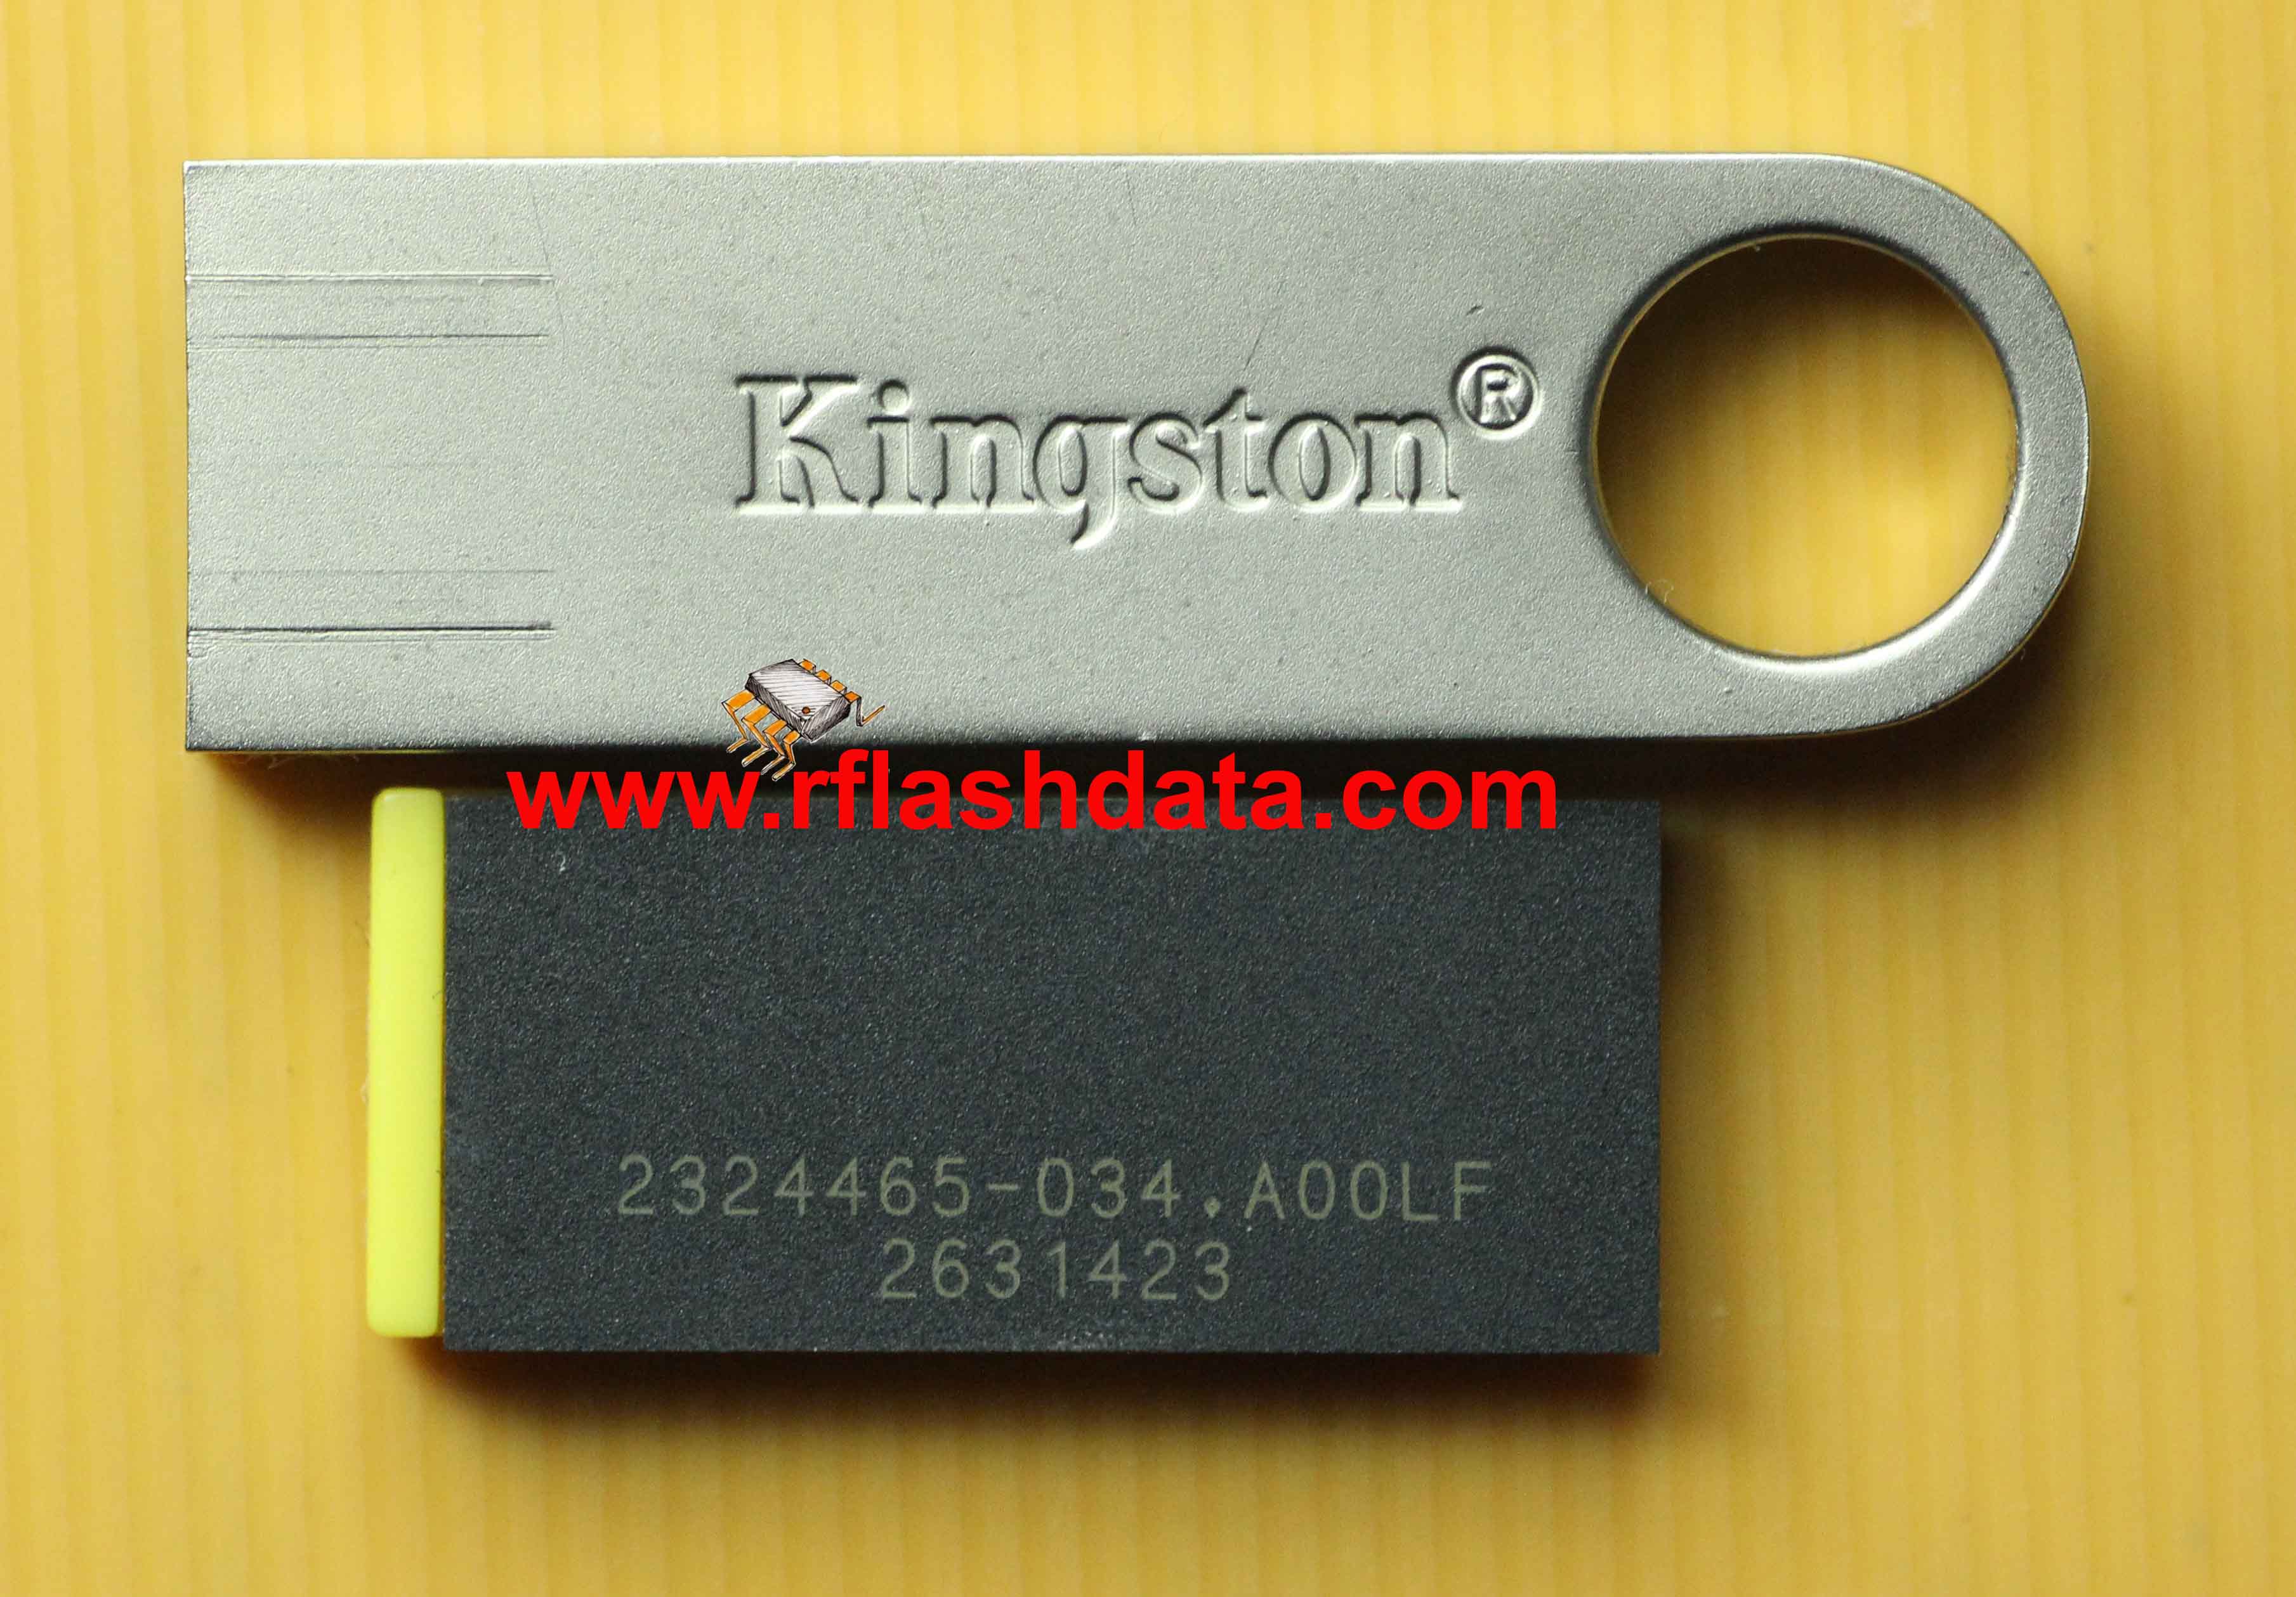 Kingston DTSE9 data recovery